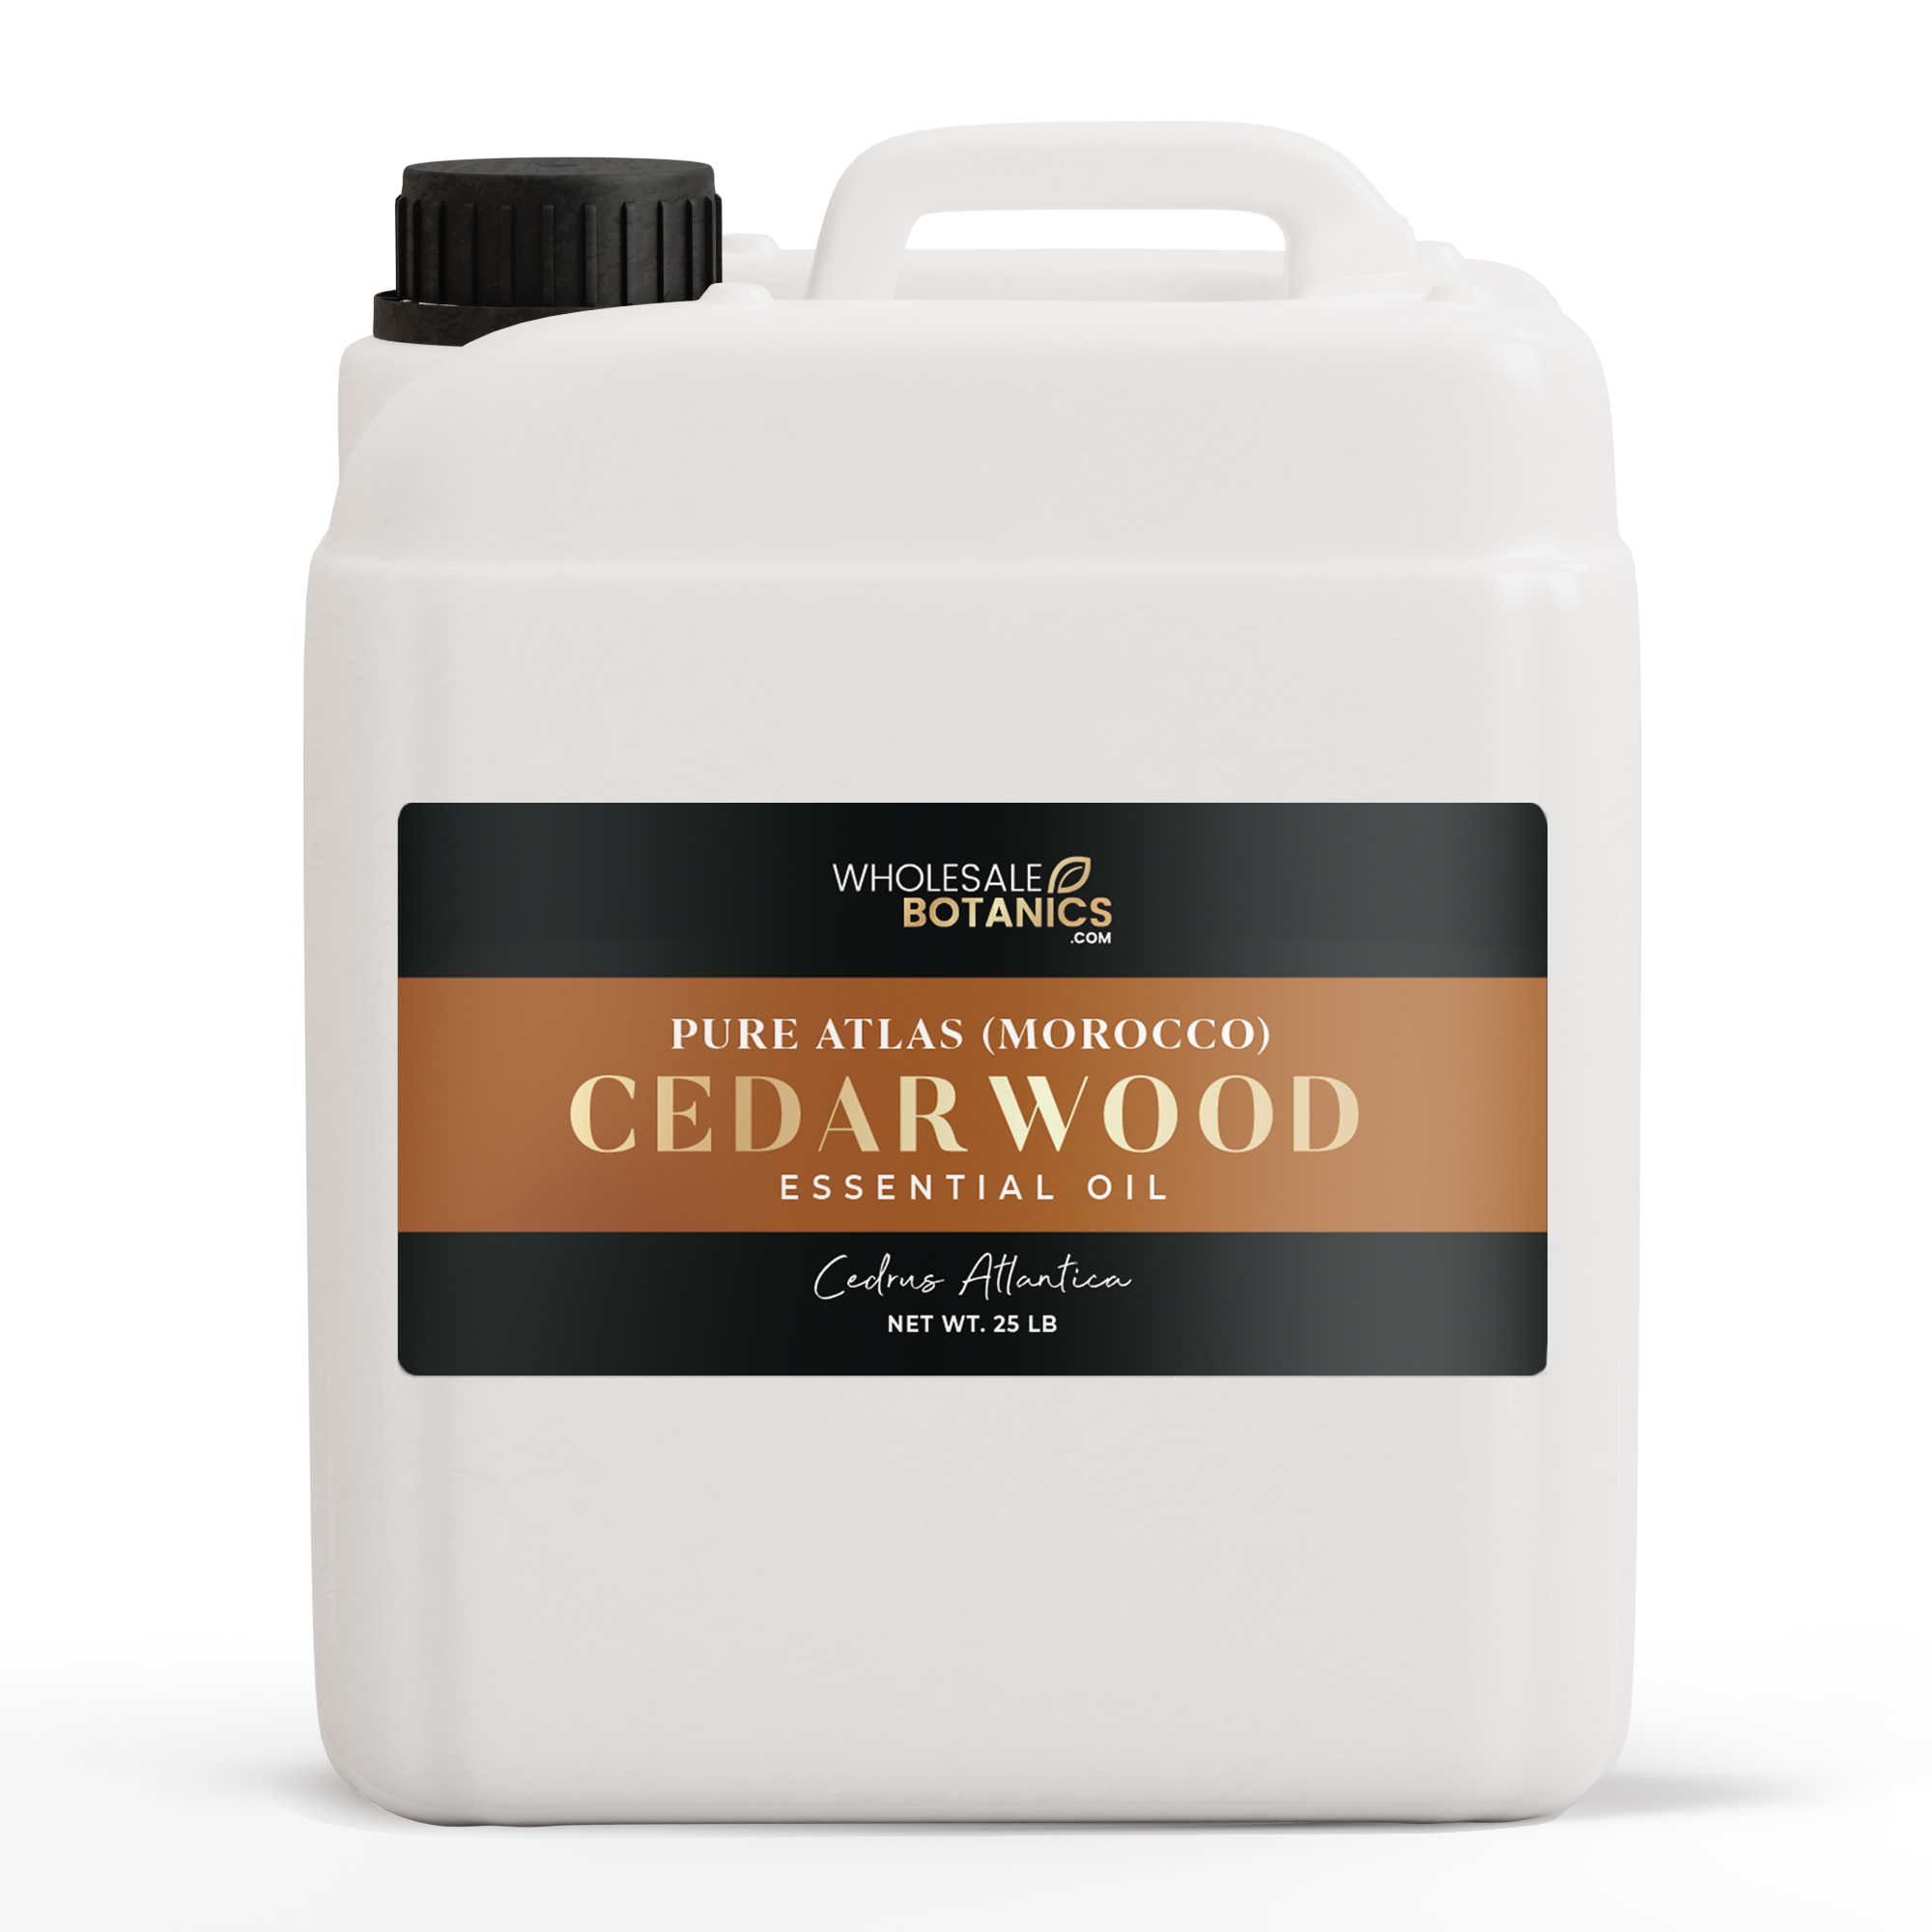 Cedarwood Essential Oil - Purity Atlas Cedarwood (Morocco) - 25 lbs